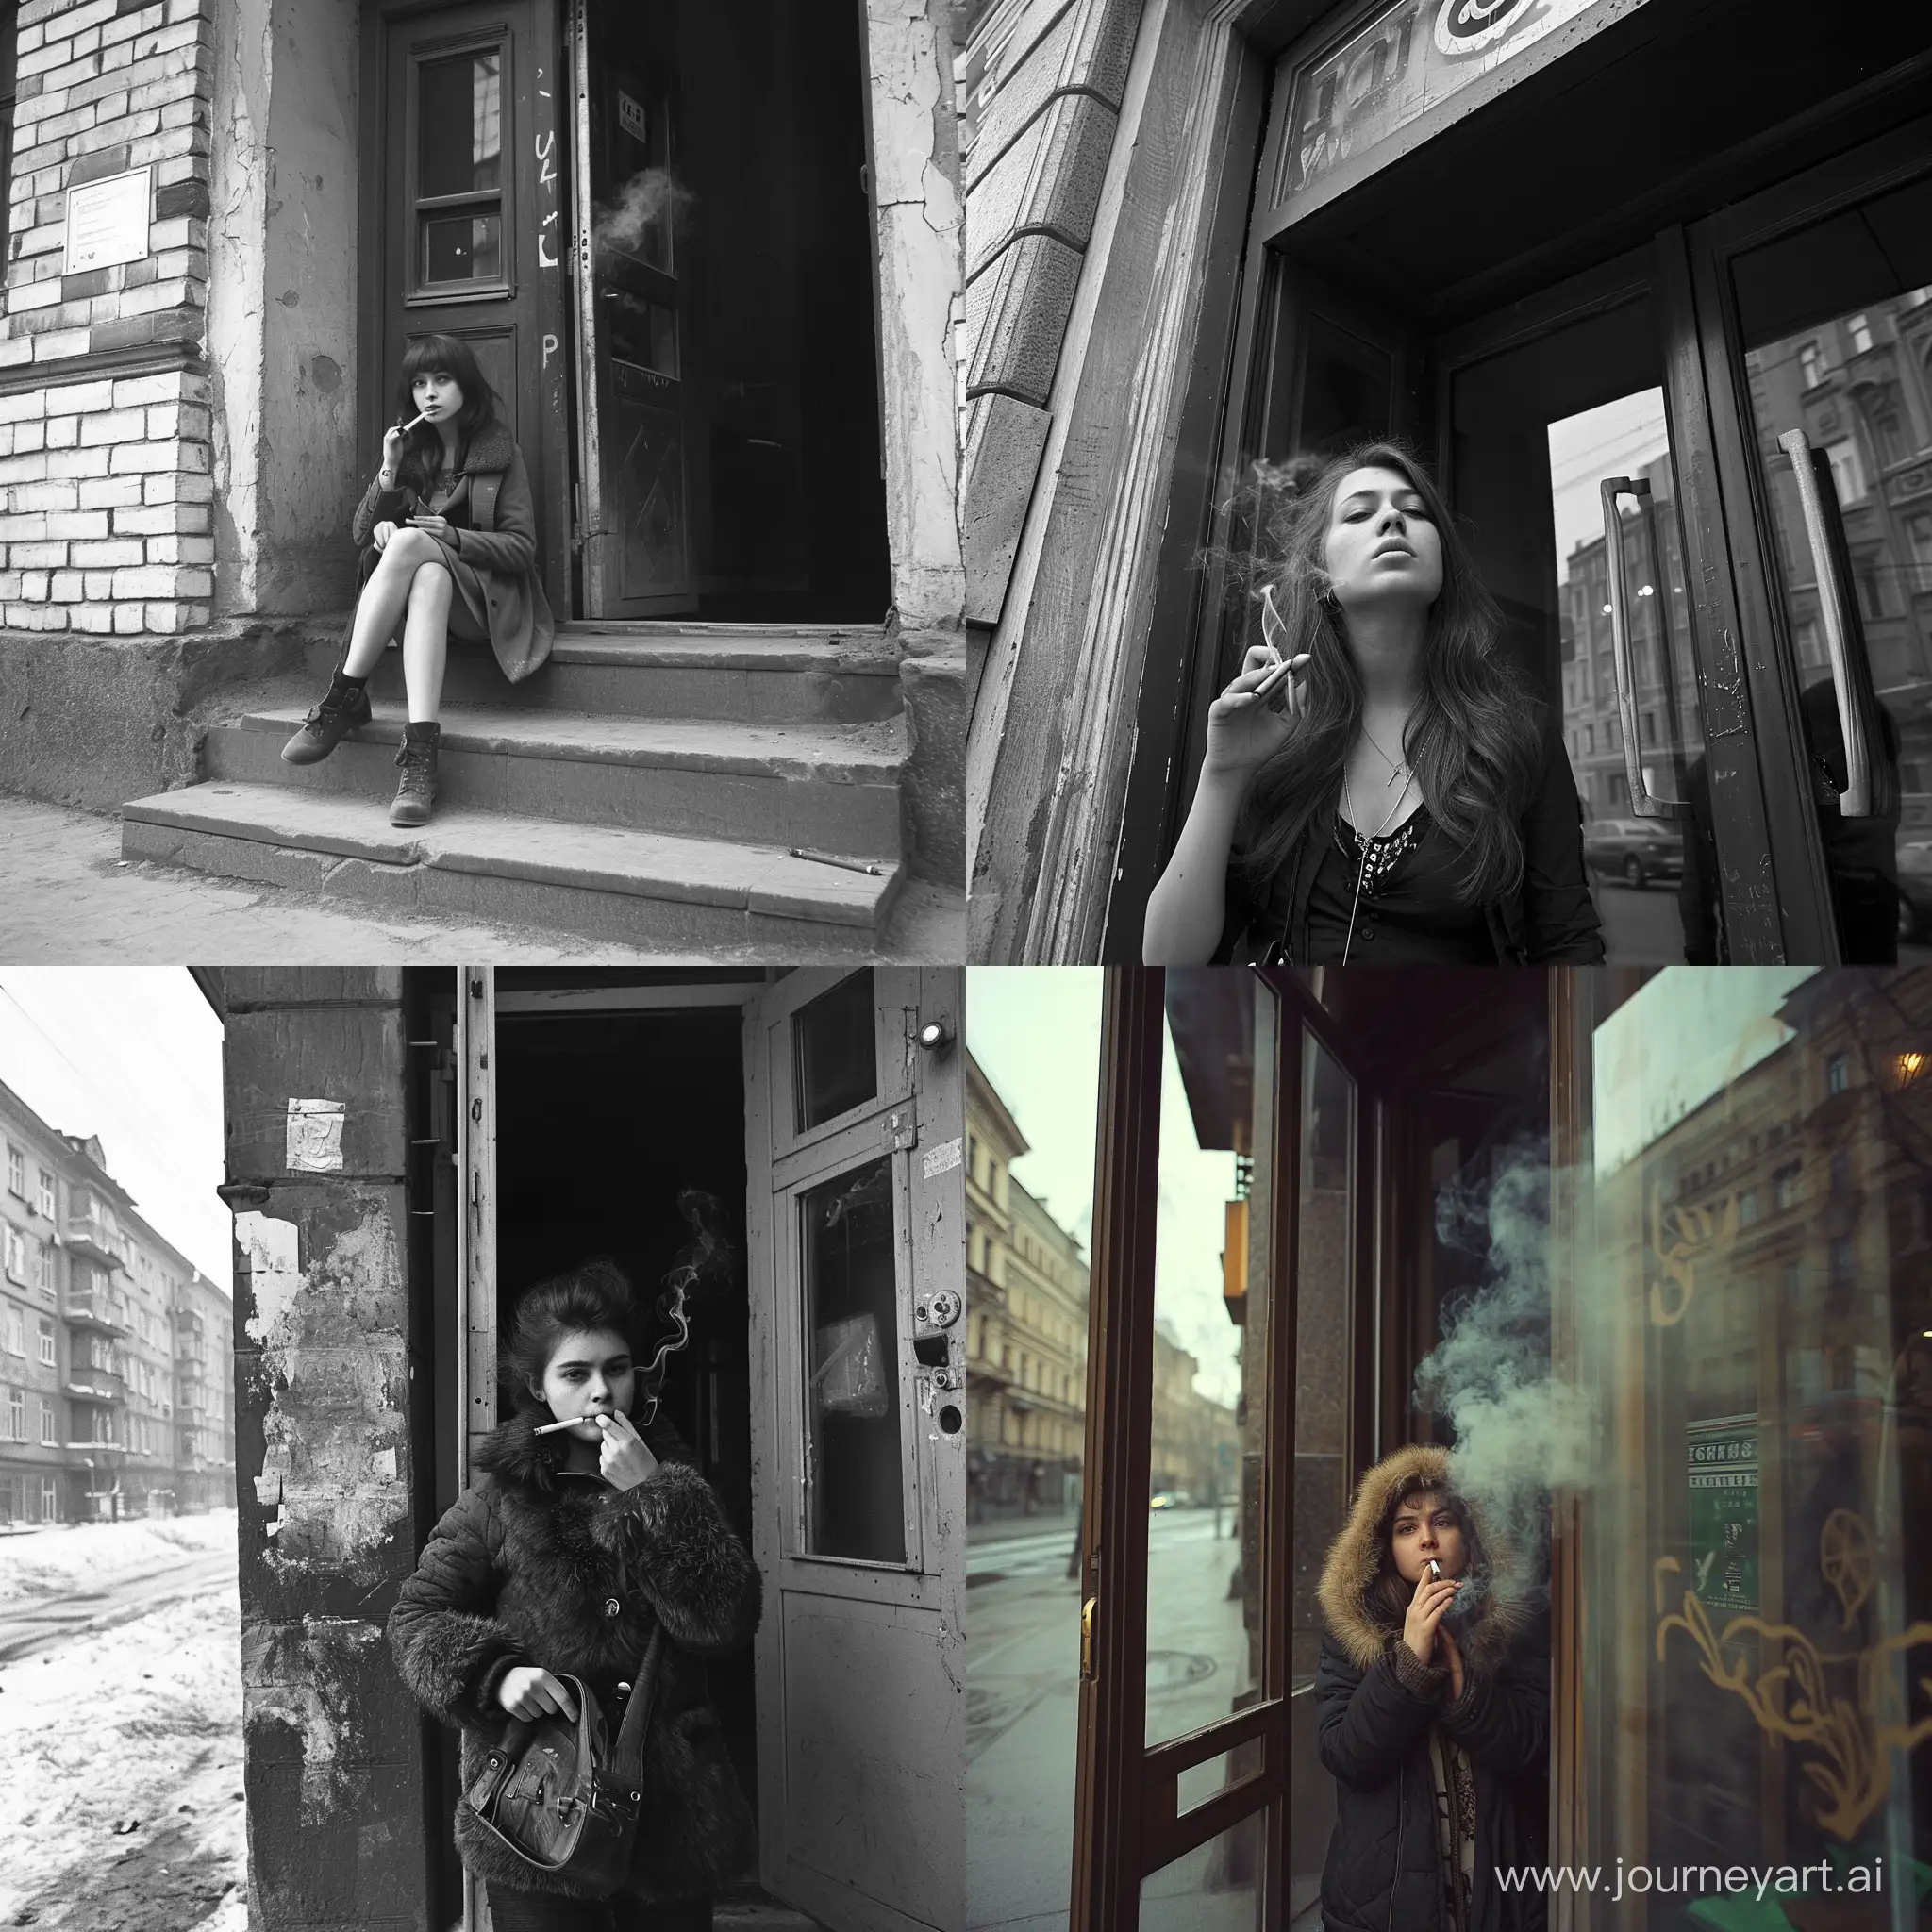 Russian-Girl-Smoking-at-FiveStorey-Building-Entrance